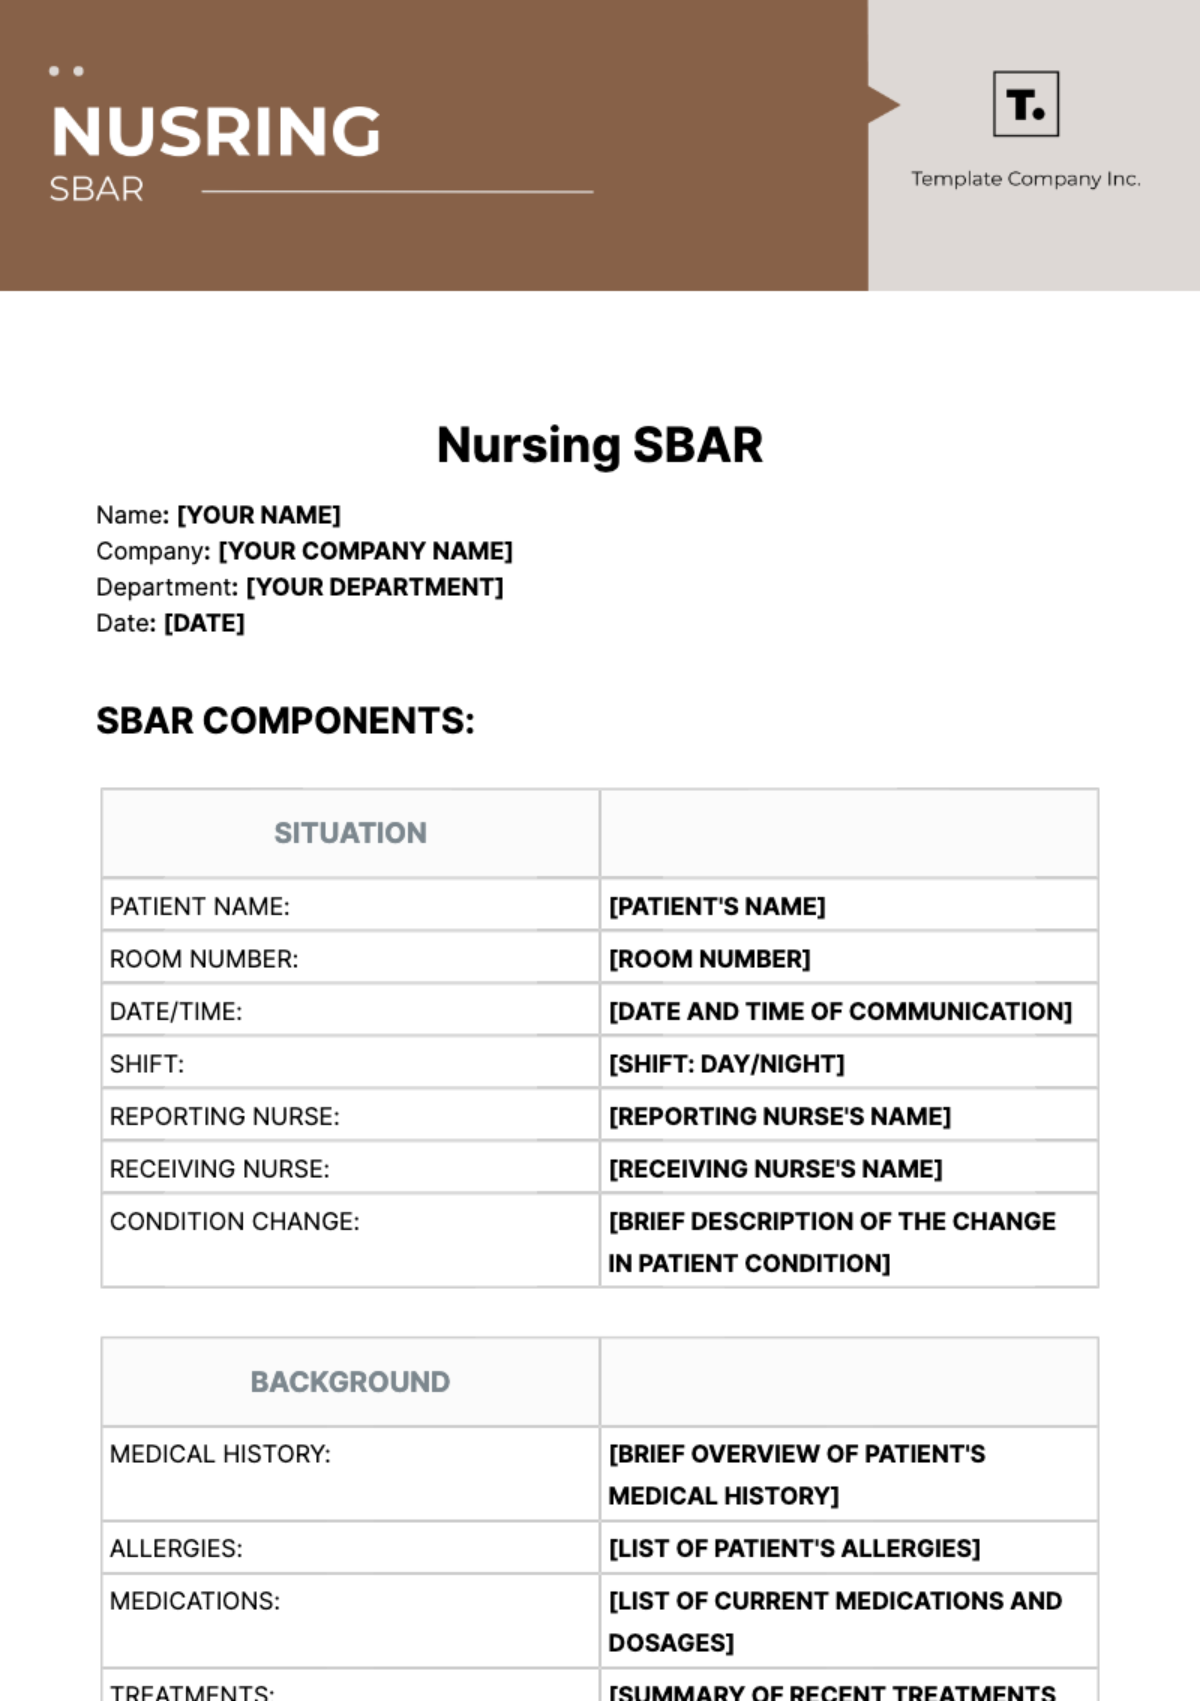 Nursing SBAR Template